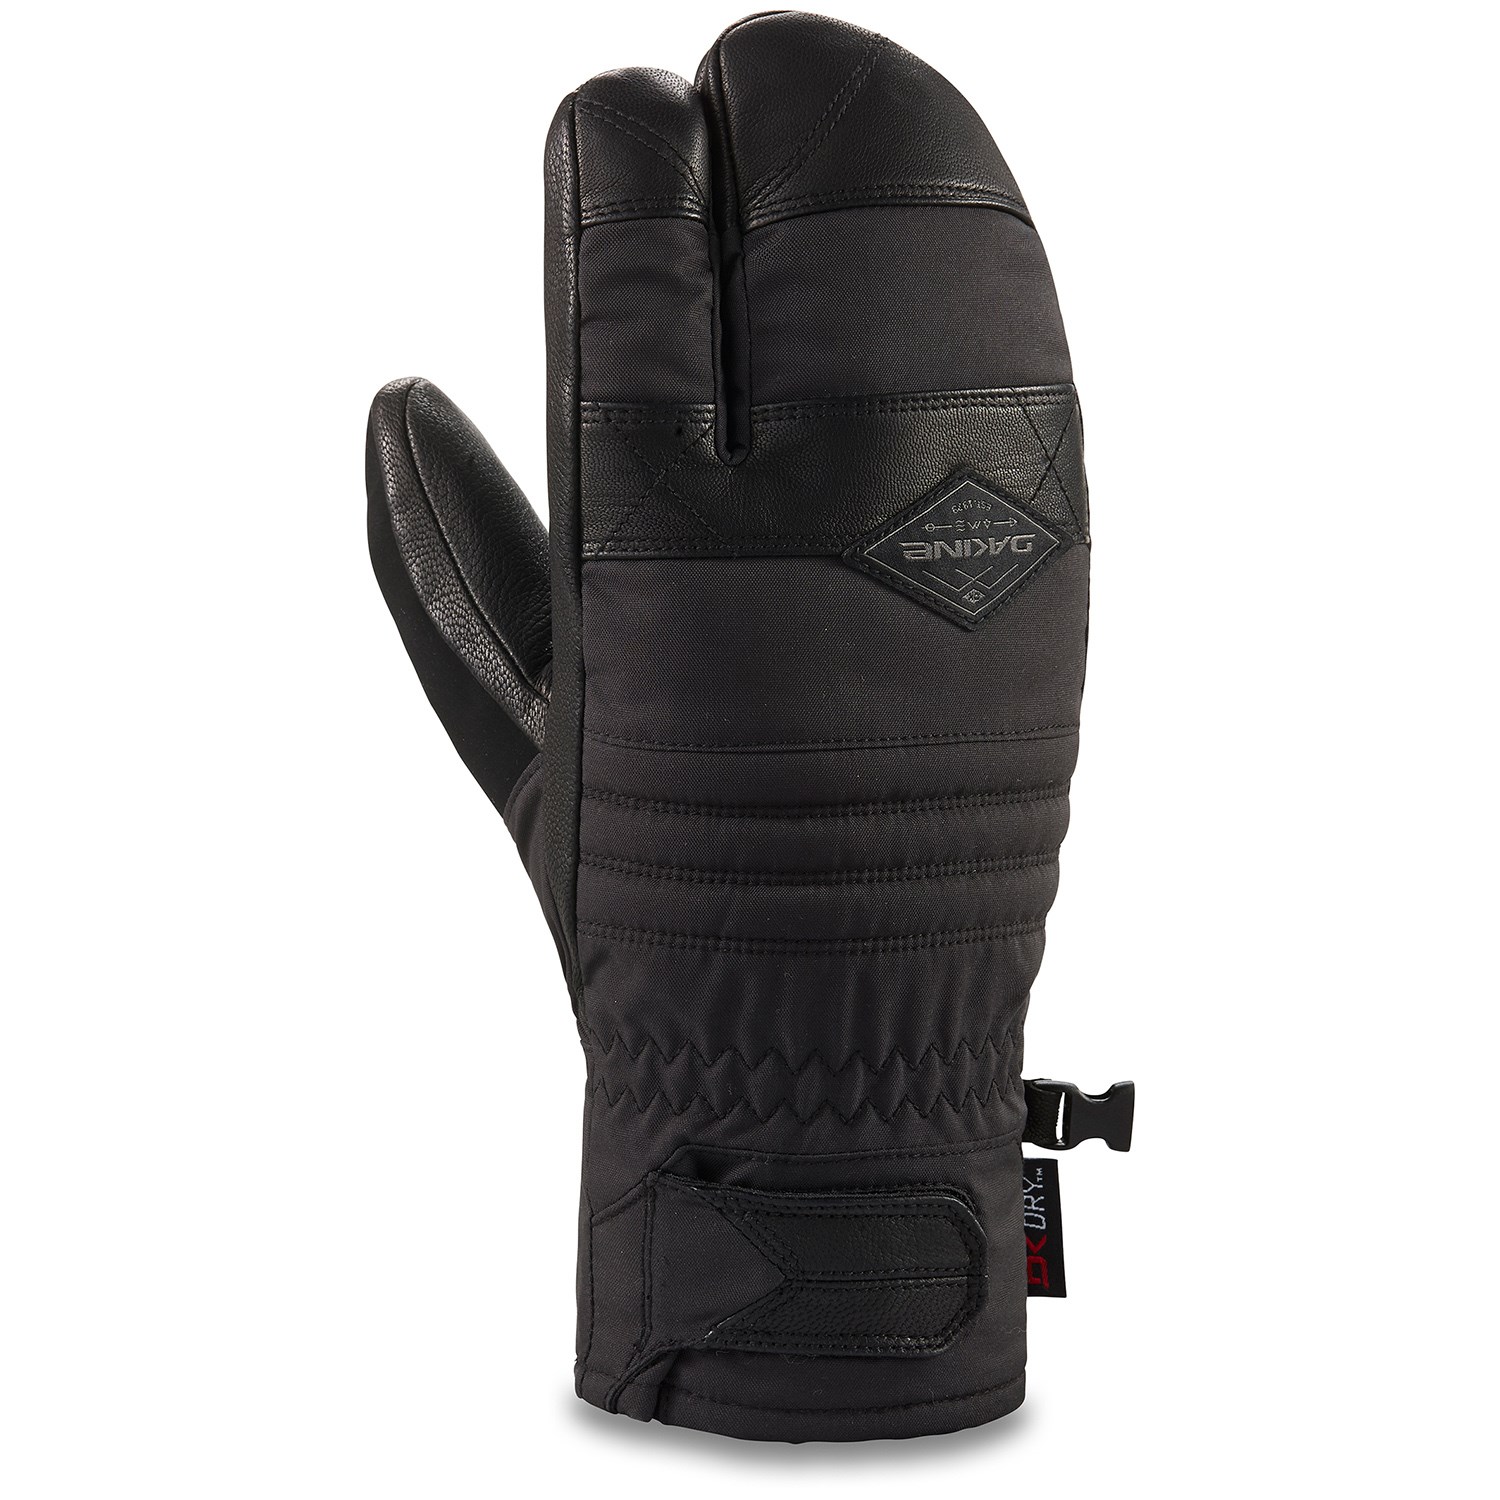 Dakine Fillmore Gore-tex Snowboard Gloves Men's Medium Black/Grey New